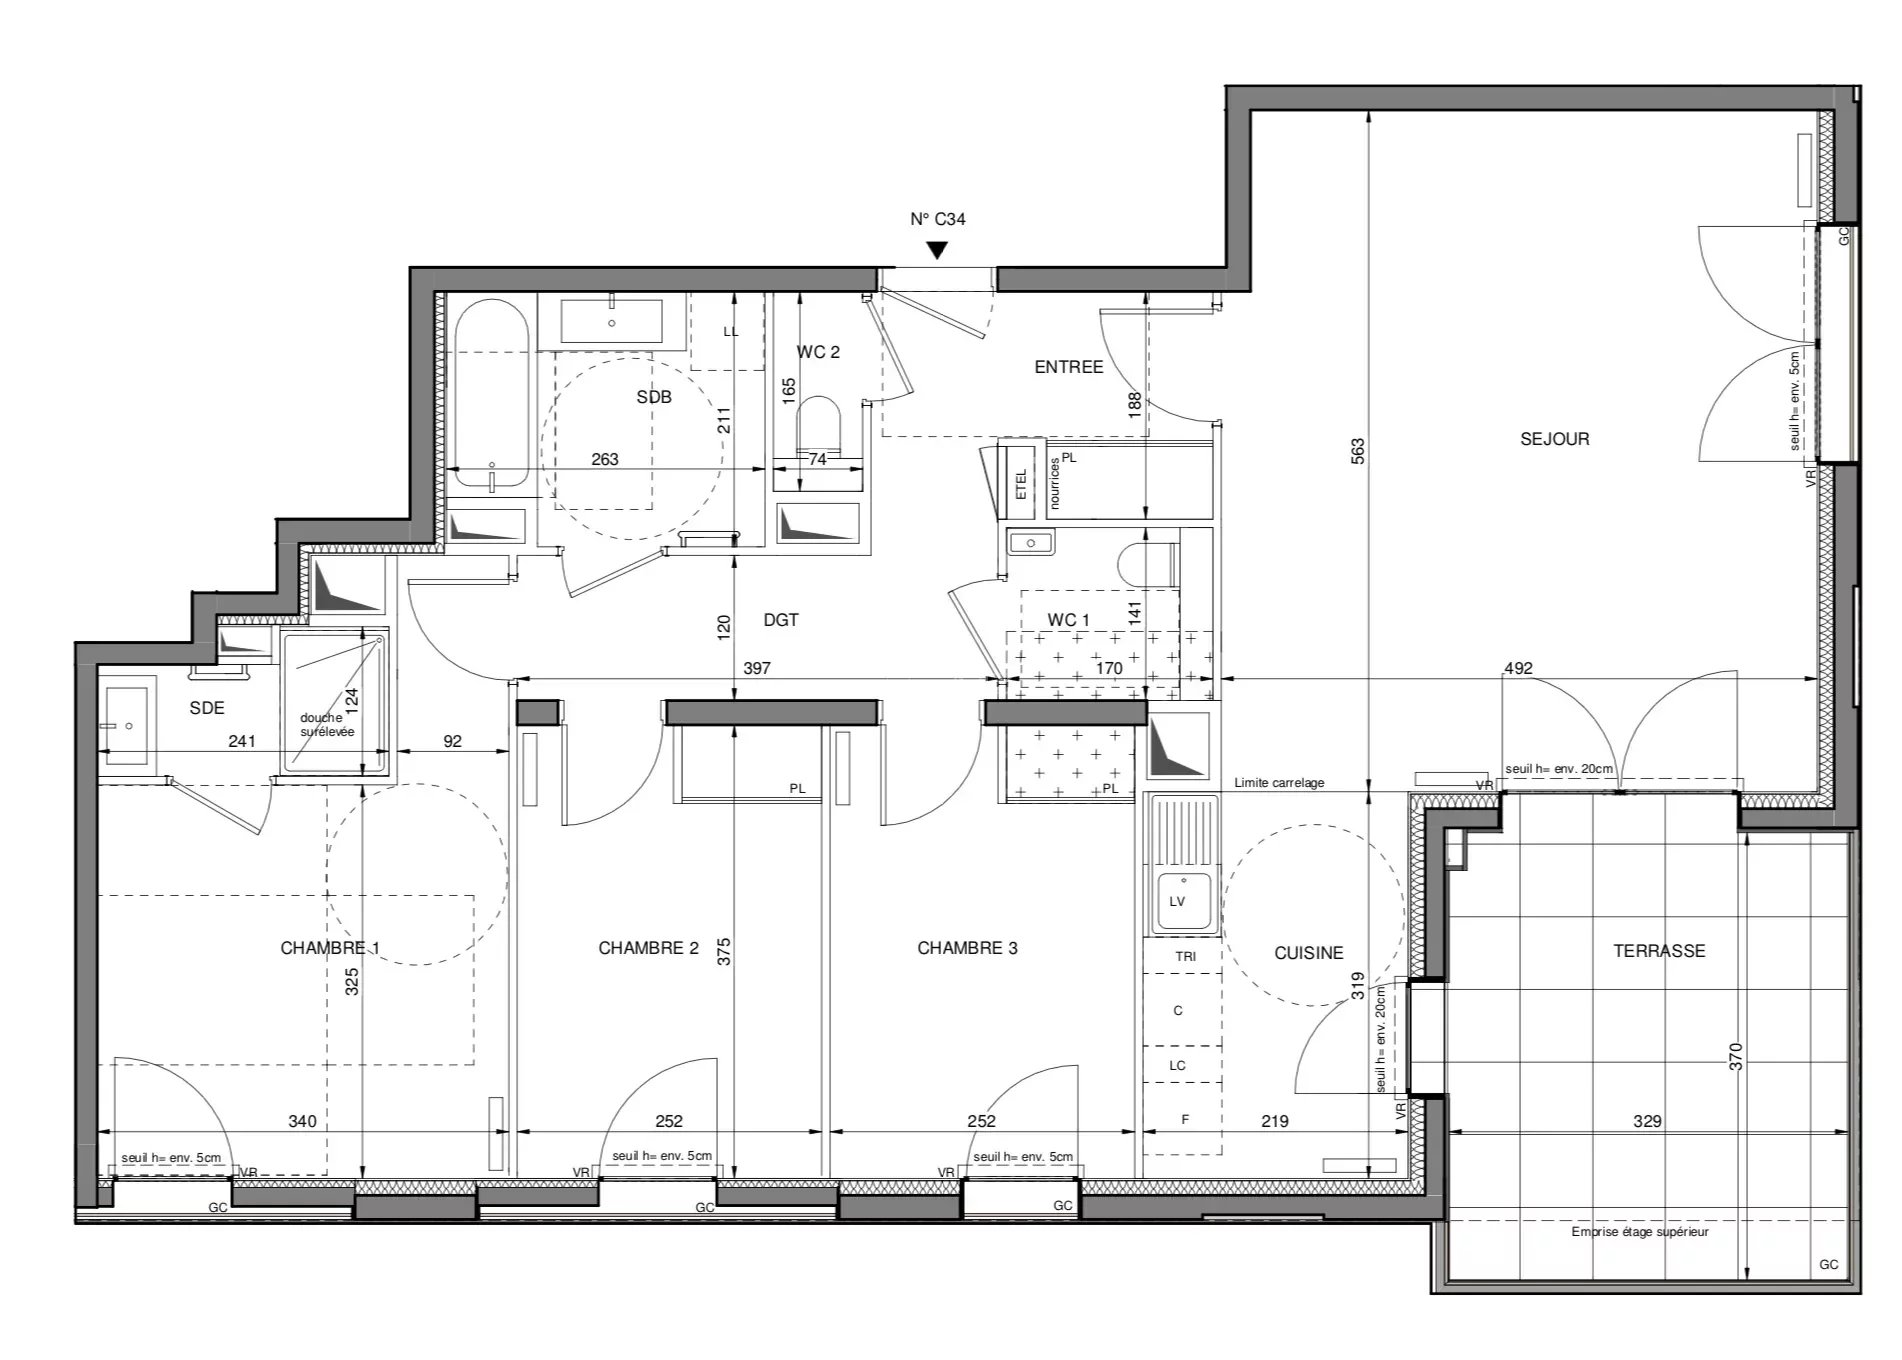 For Sale - New Development - 3-Bedroom Apartment - Boulogne-Billancourt (92)